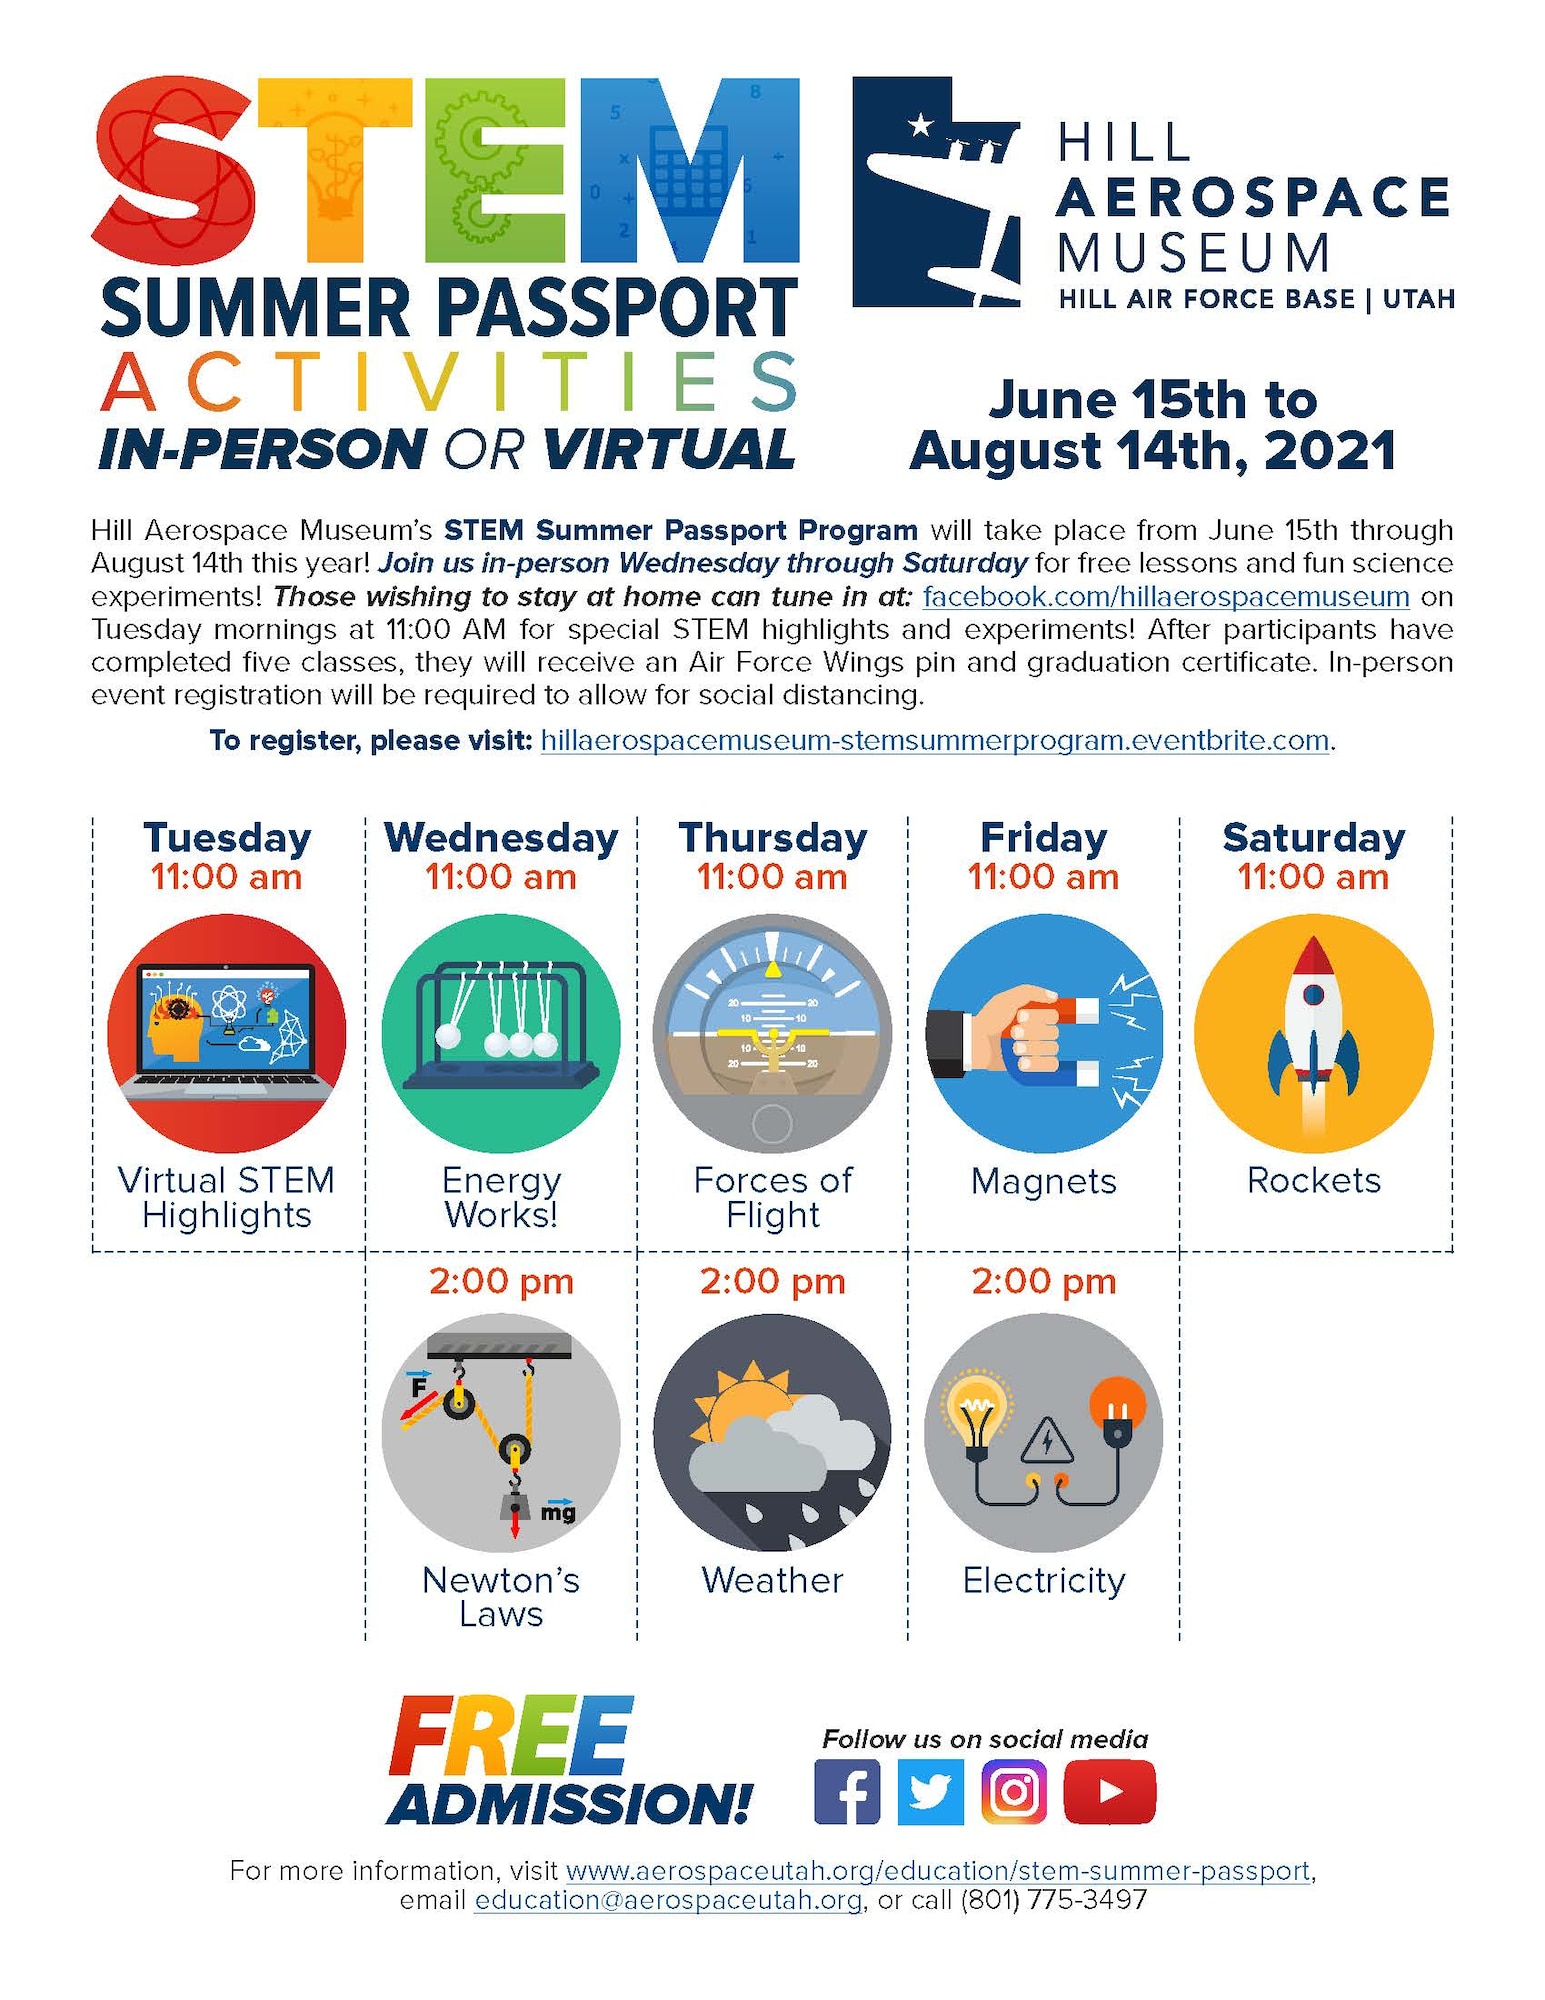 A flyer depicting the museum's STEM Summer Passport Program.